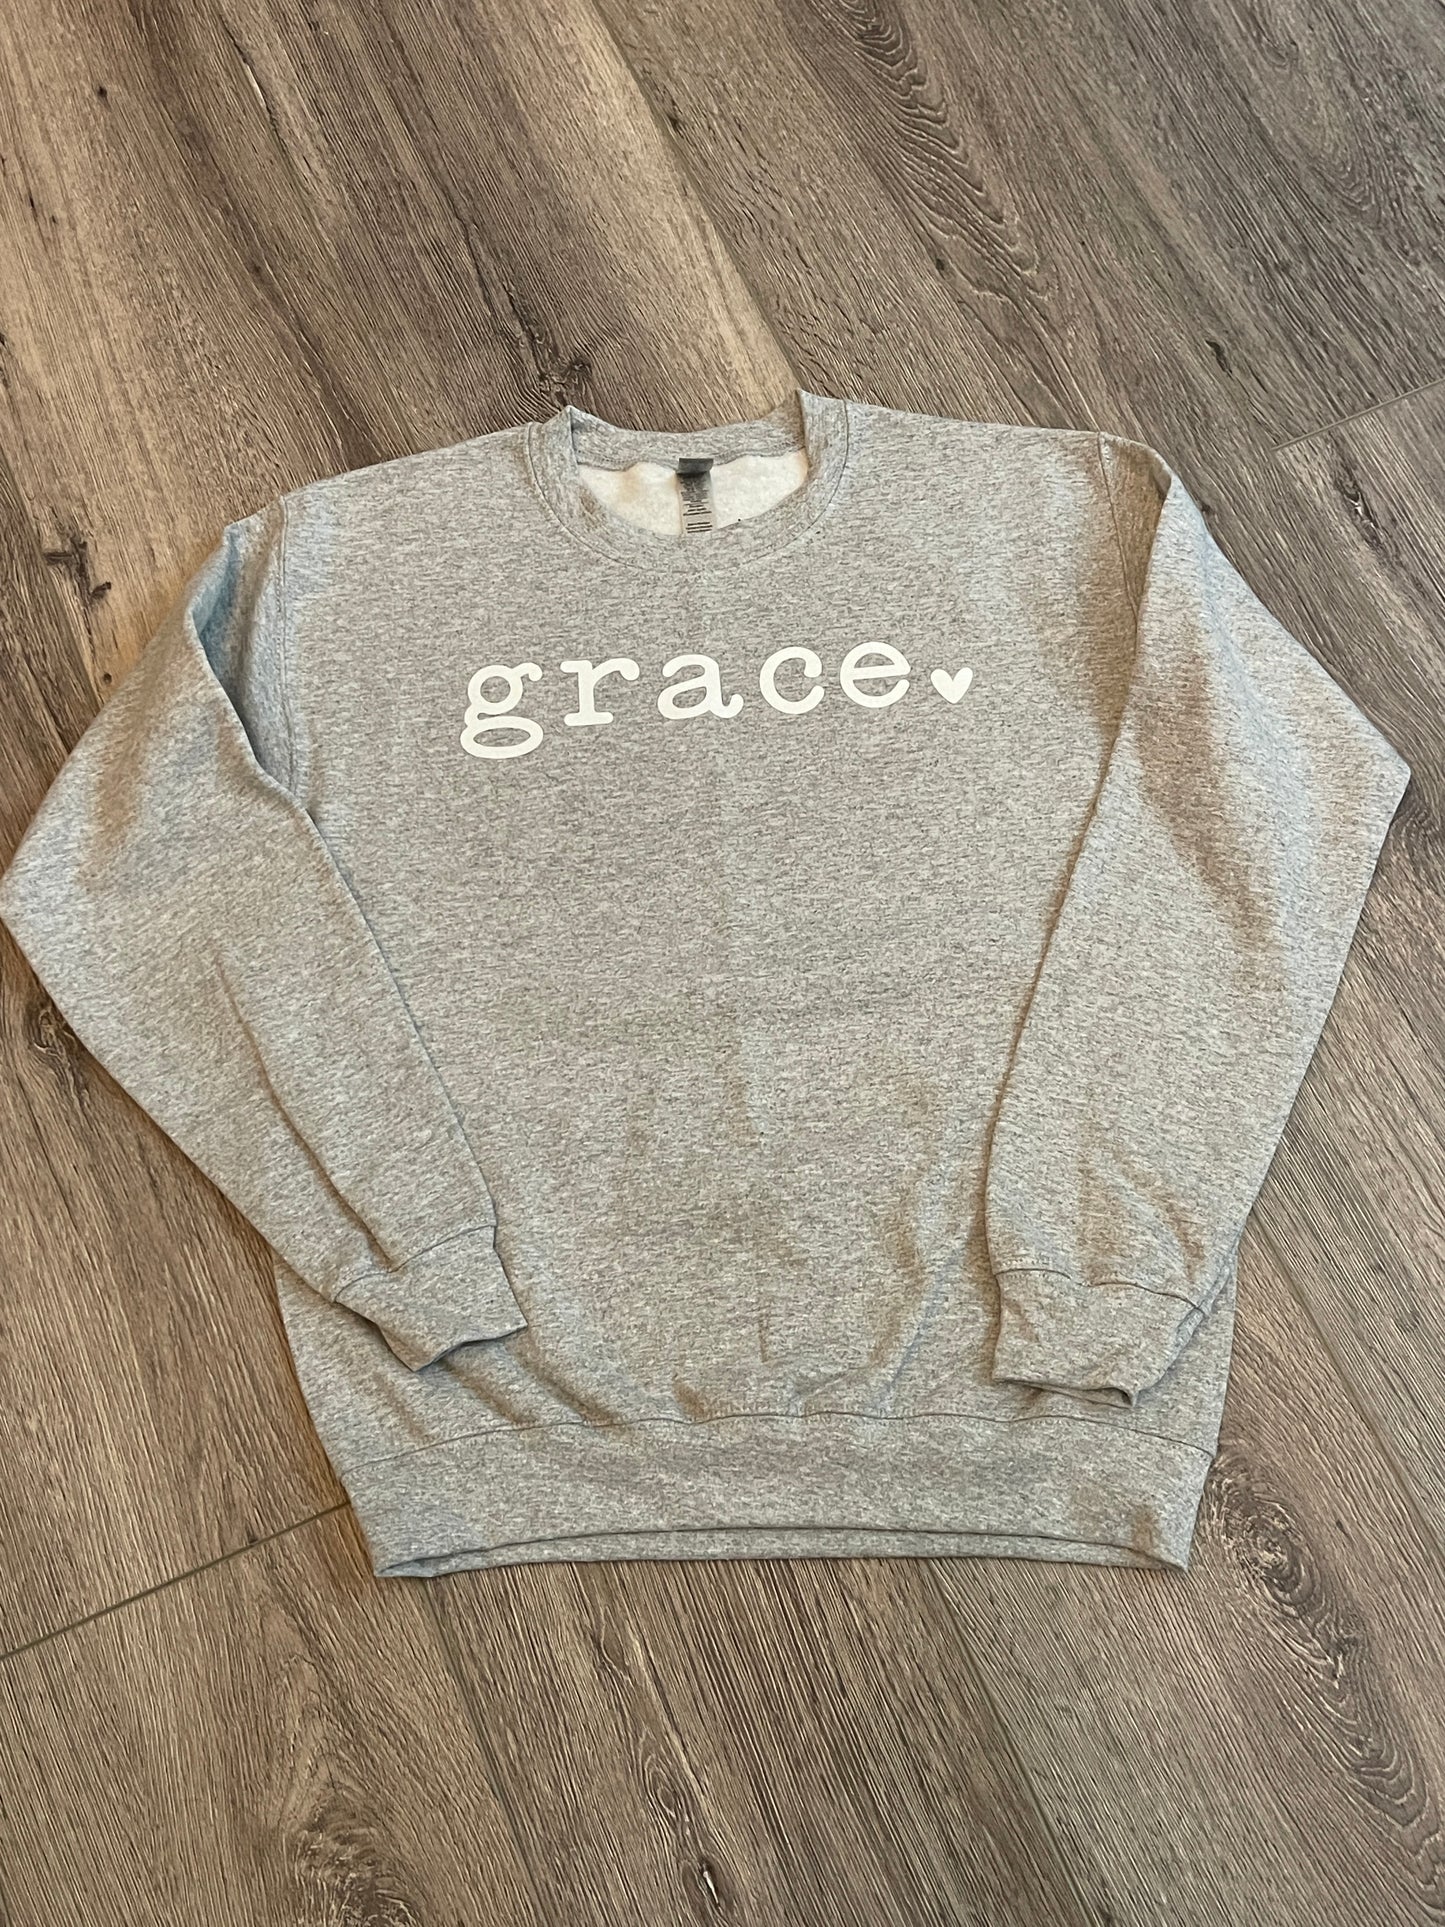 Grace gray sweatshirt